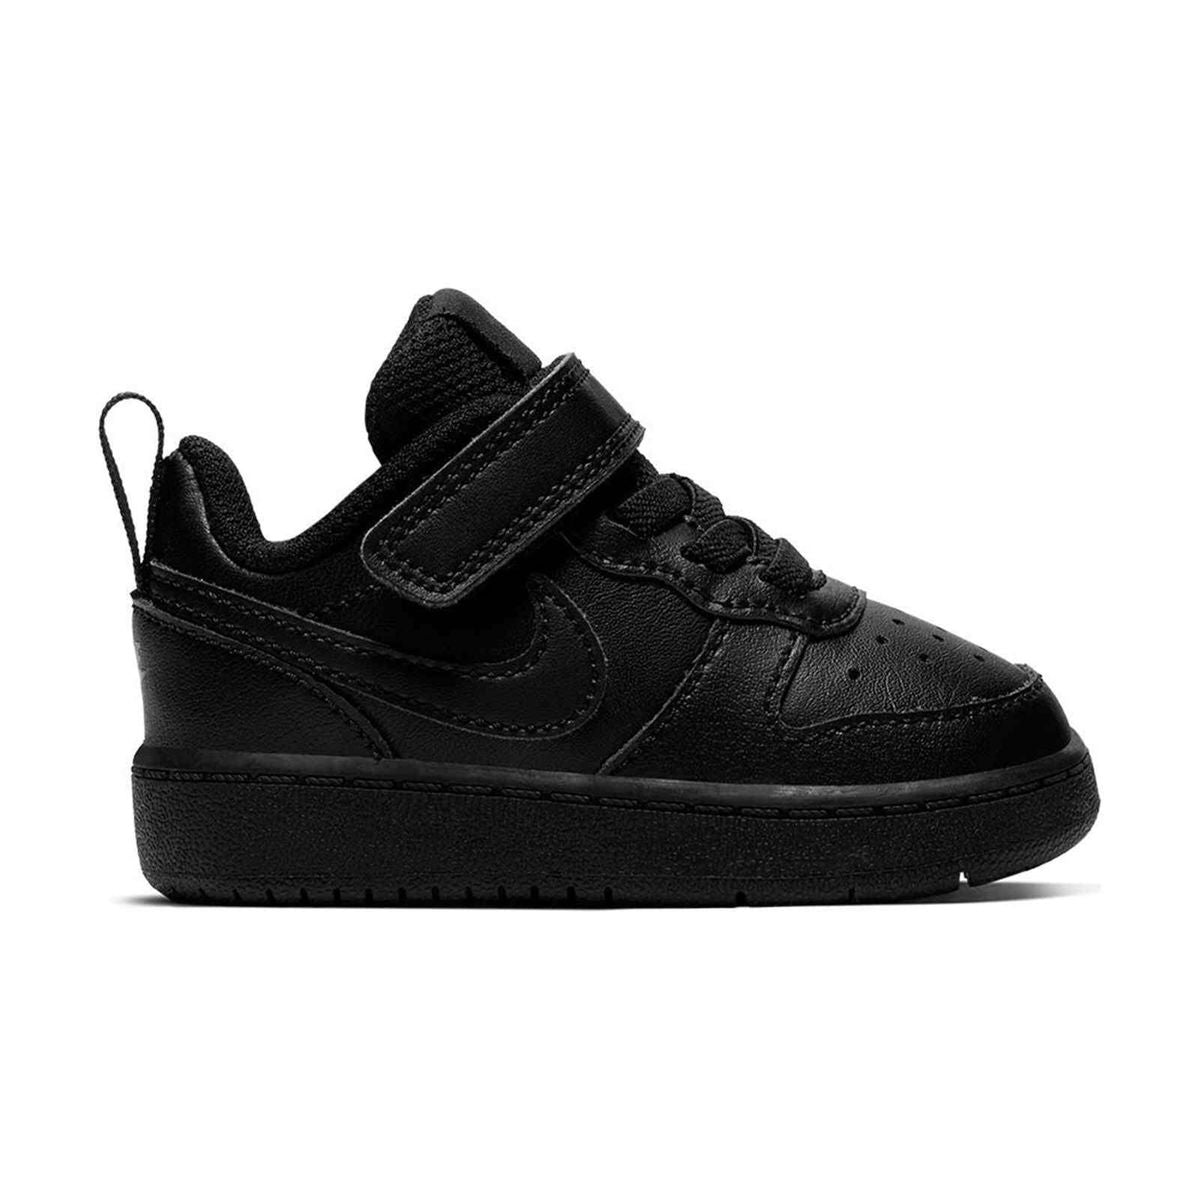 BQ5453 - Shoes - Nike